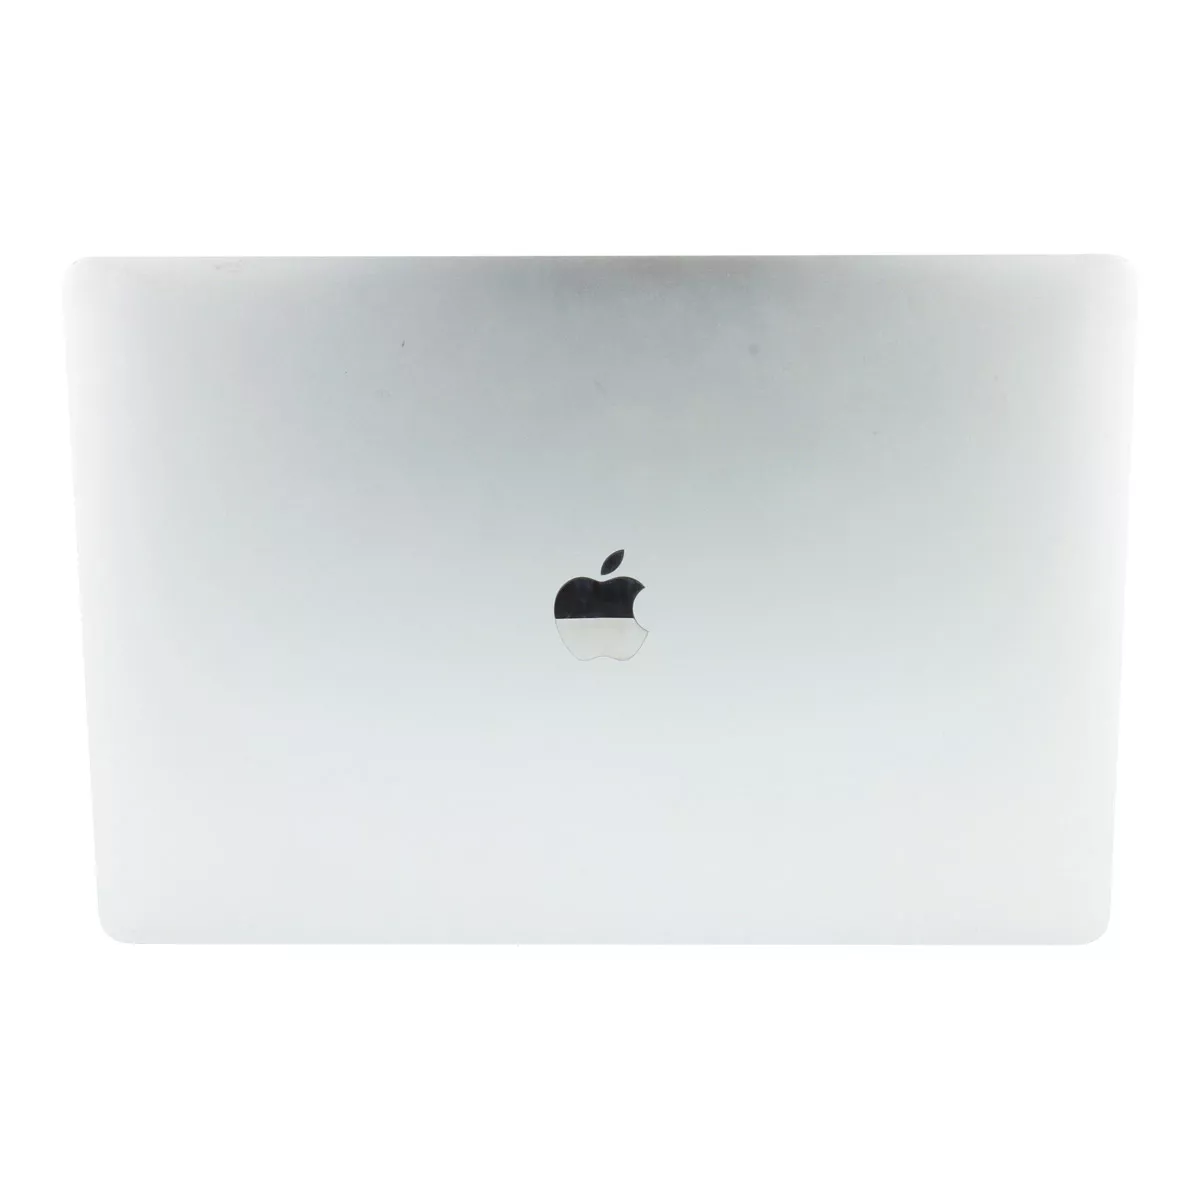 Apple MacBook Pro 15" 2018 Core i7 8750H 16 GB 500 GB SSD Webcam B